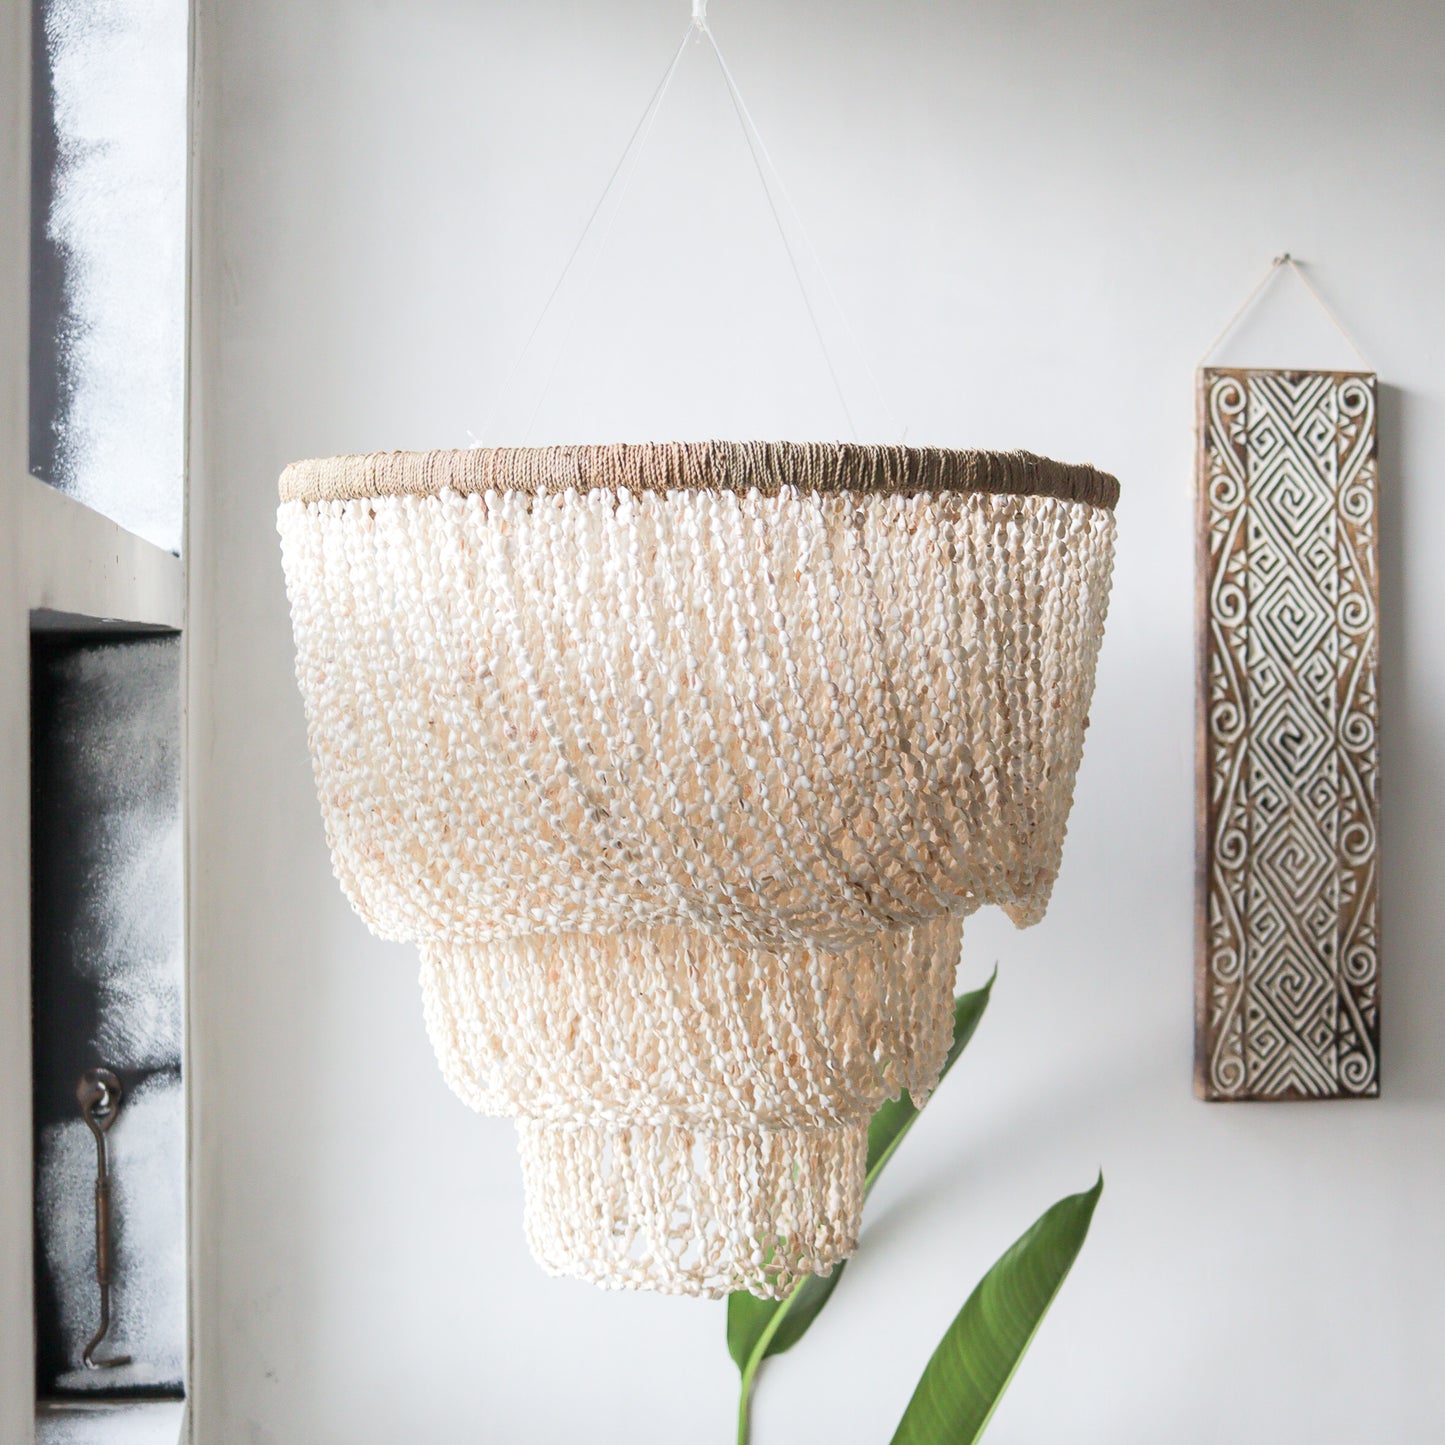 Home decor seashell chandelier